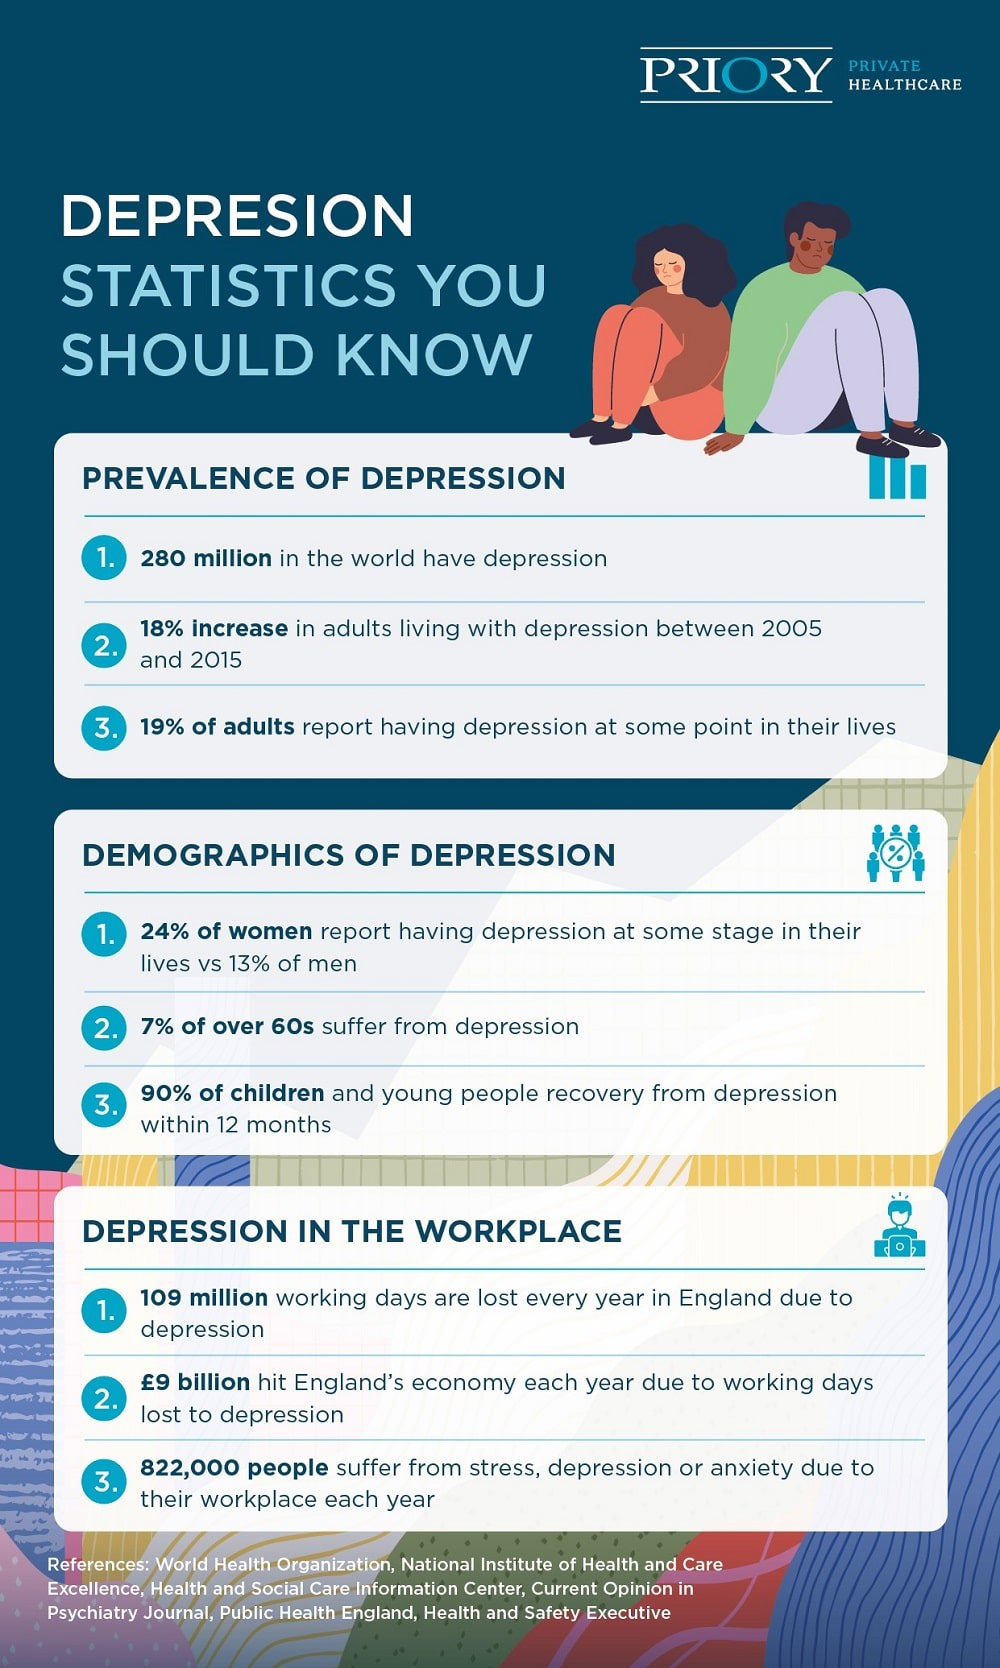 Depression statistics you should know